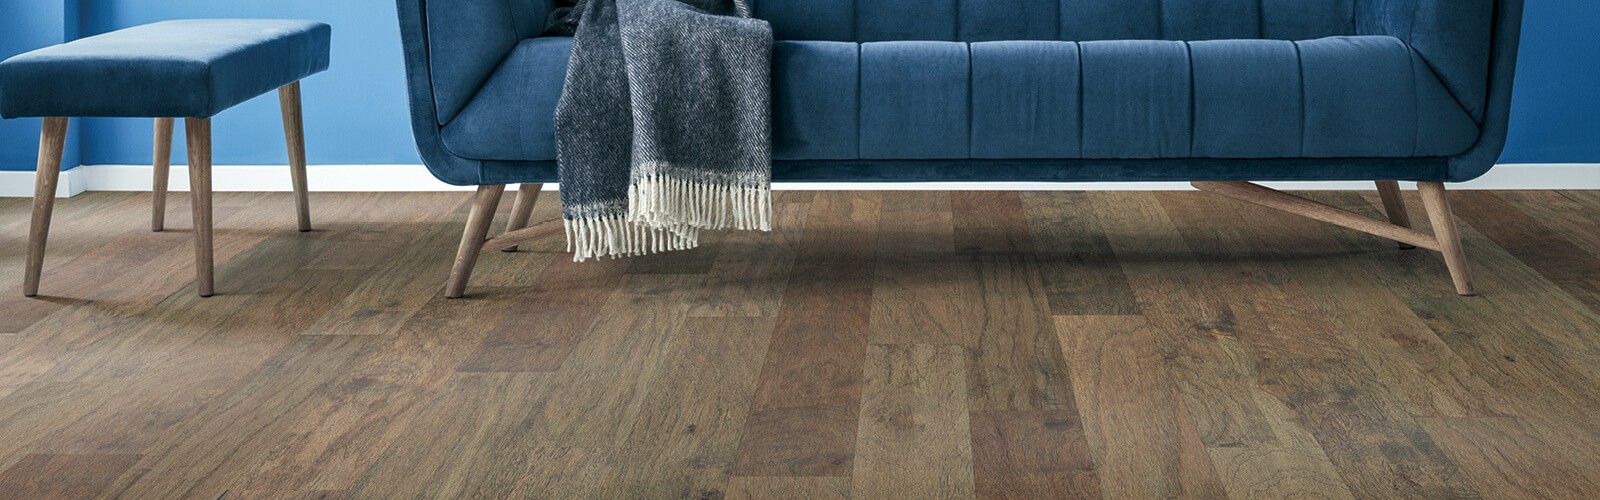 Hardwood floor | Redd Flooring & Design Center